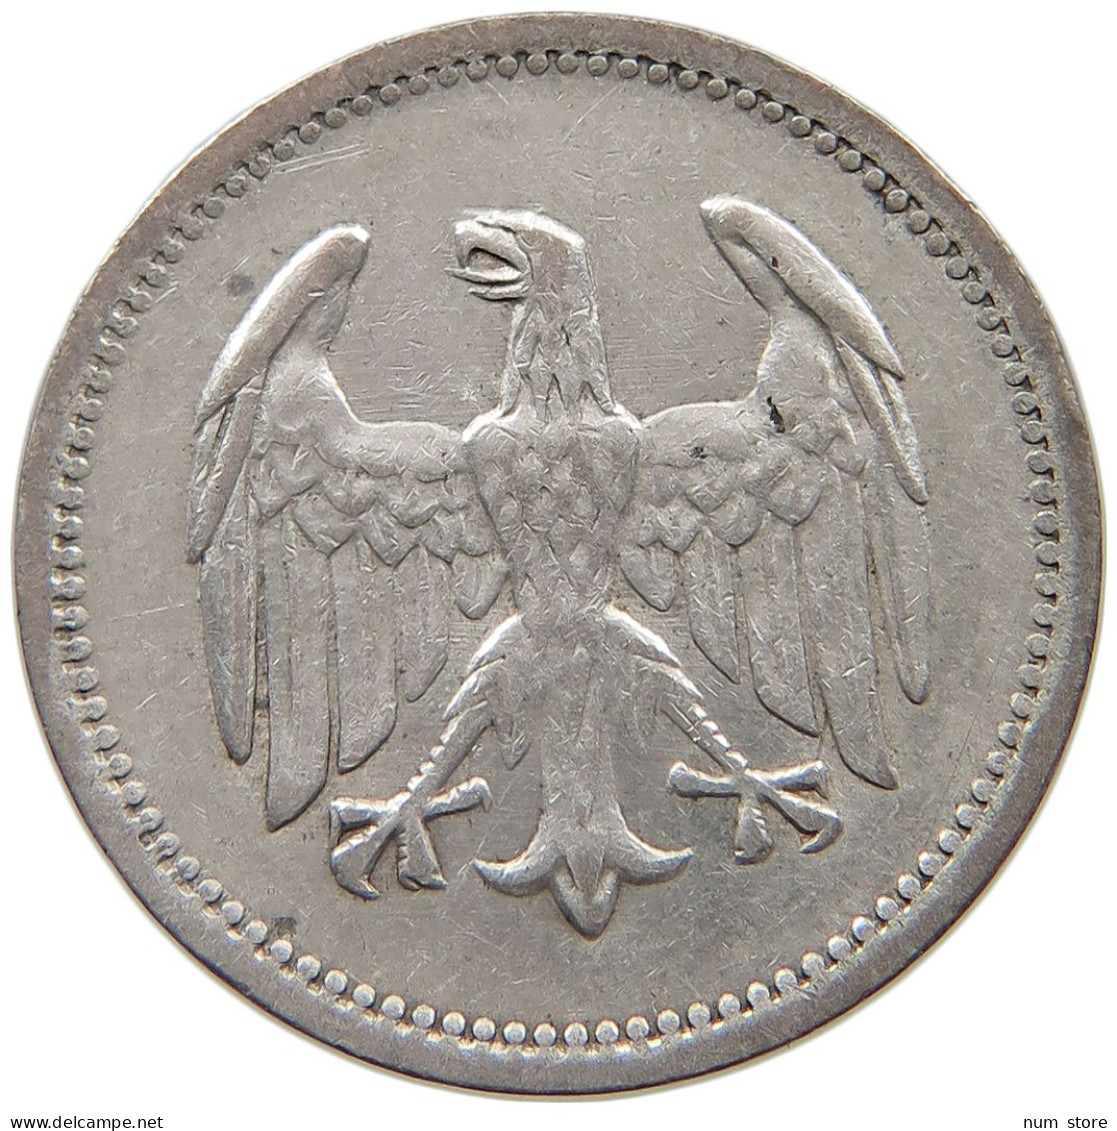 WEIMARER REPUBLIK MARK 1924 A  #MA 021062 - 1 Mark & 1 Reichsmark